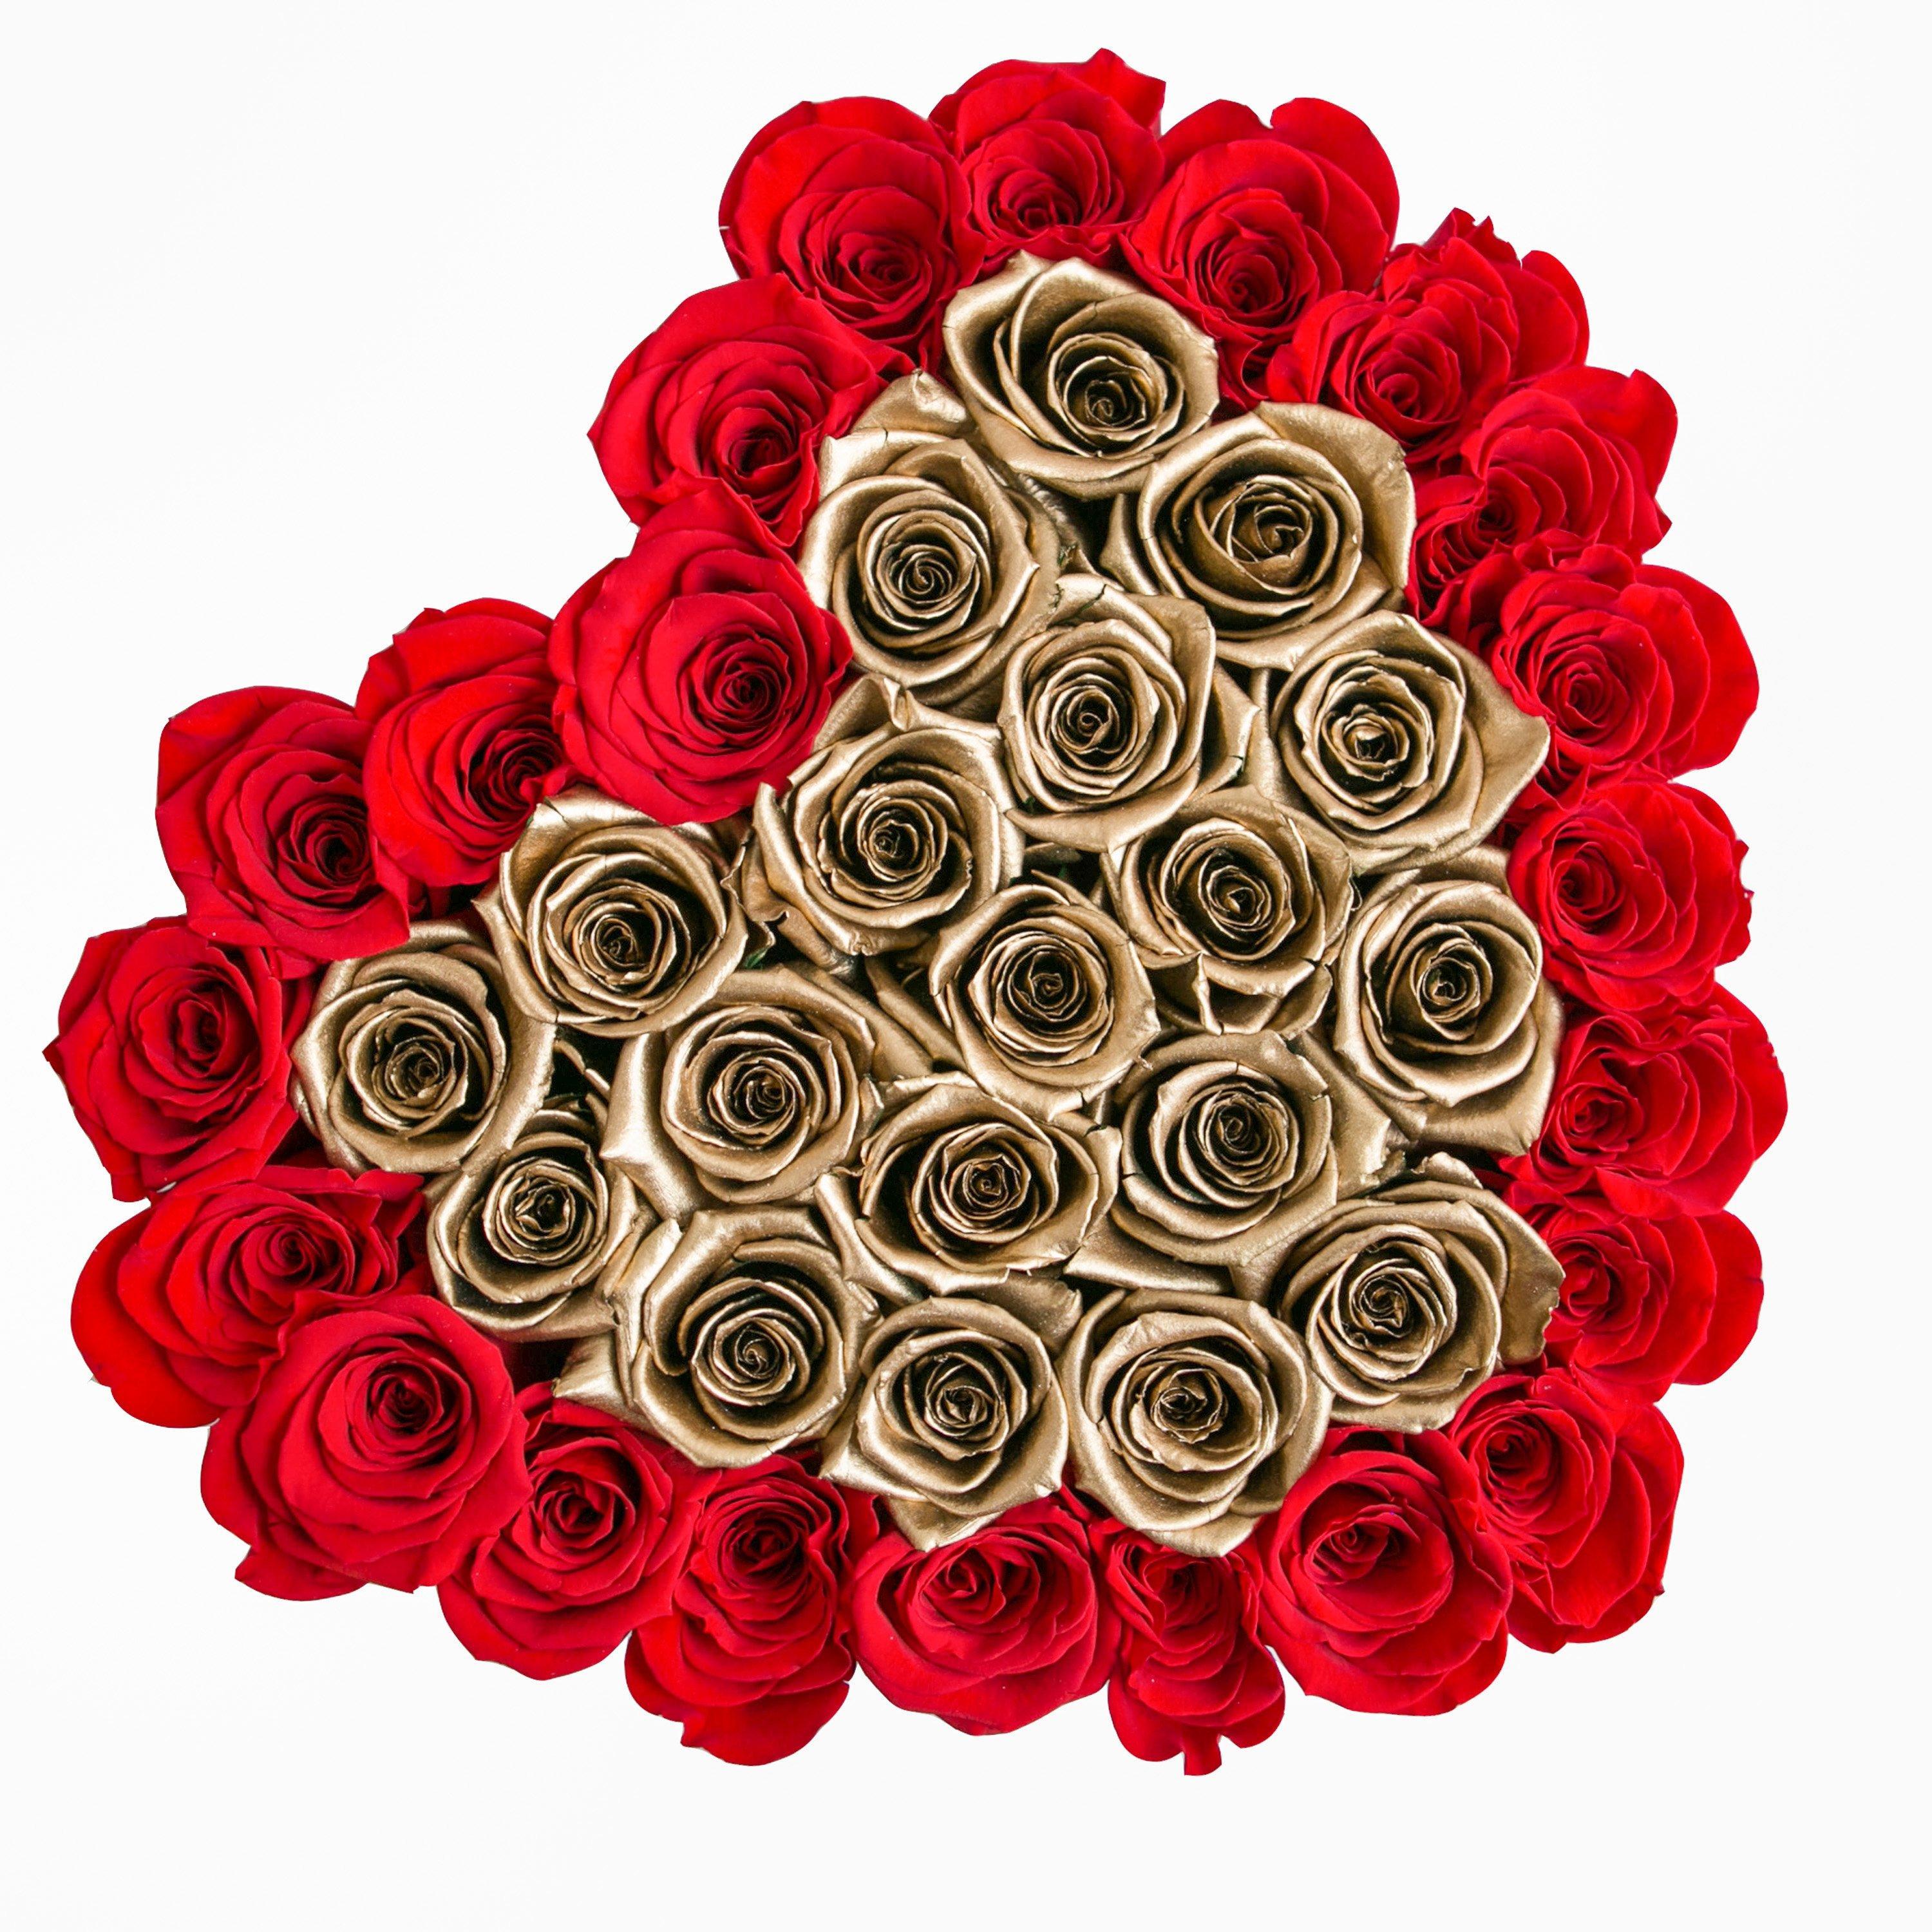 LOVE box - black - red&gold (heart) roses gold eternity roses - the million roses